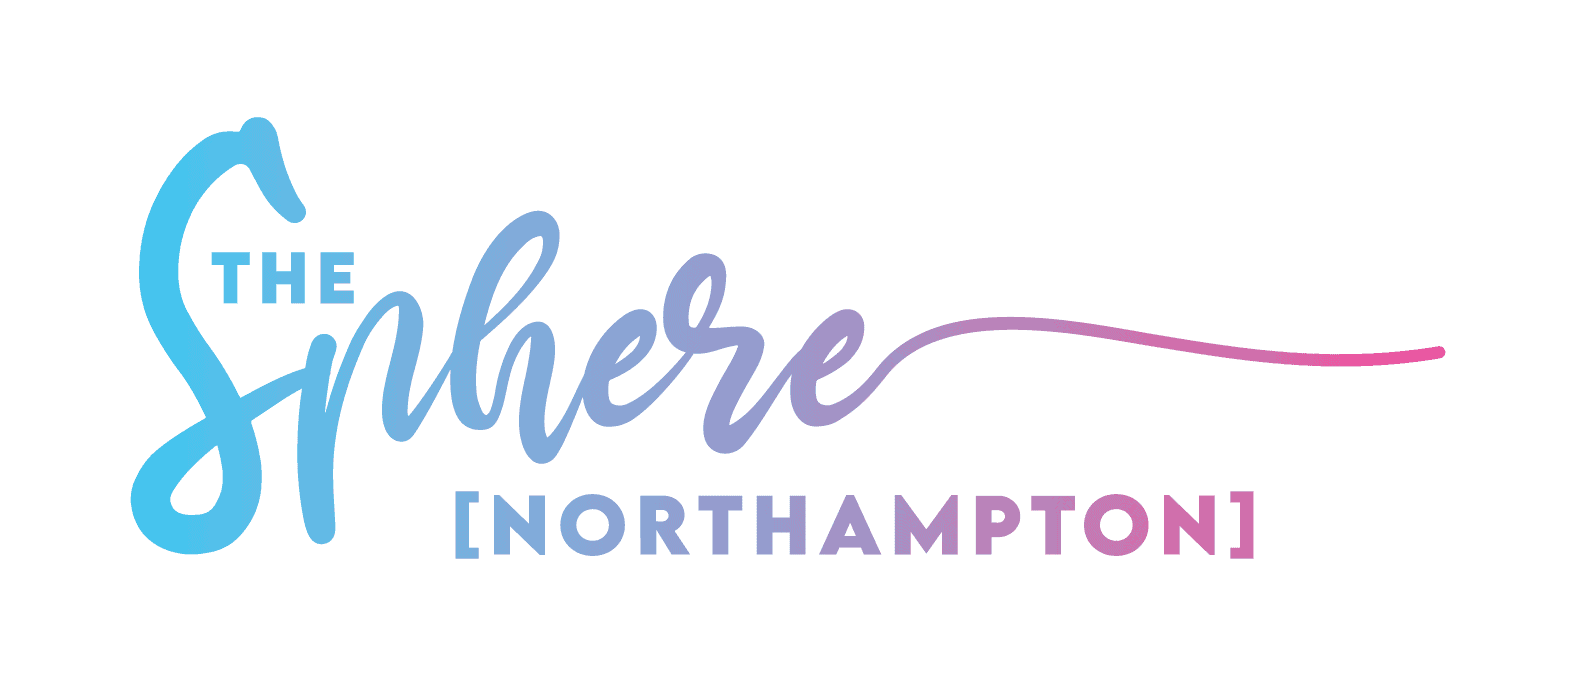 The Sphere Northampton logo